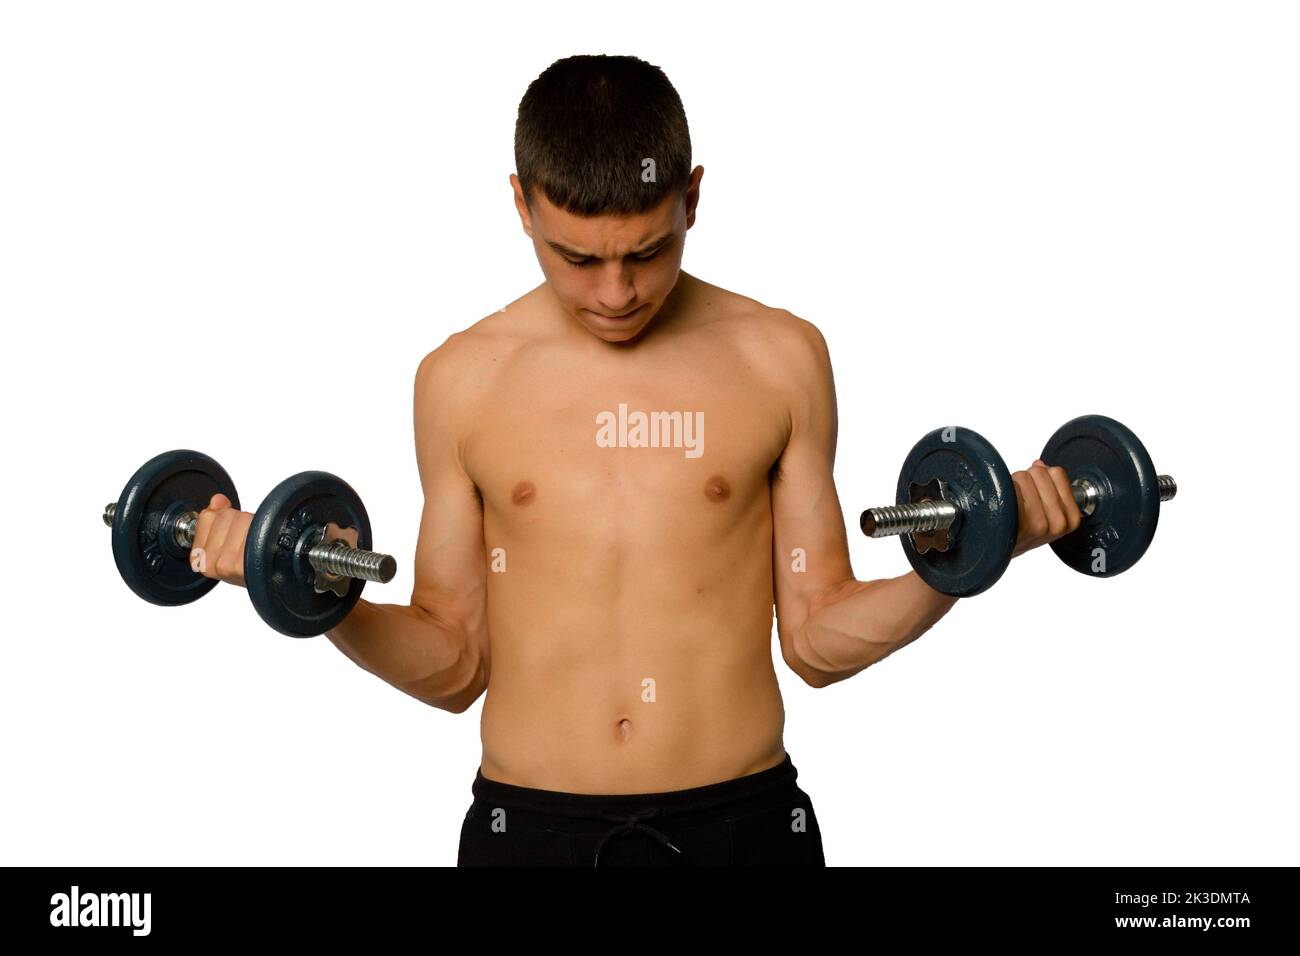 Shirtless 19 year old teenage boy lifting dummbells Stock Photo